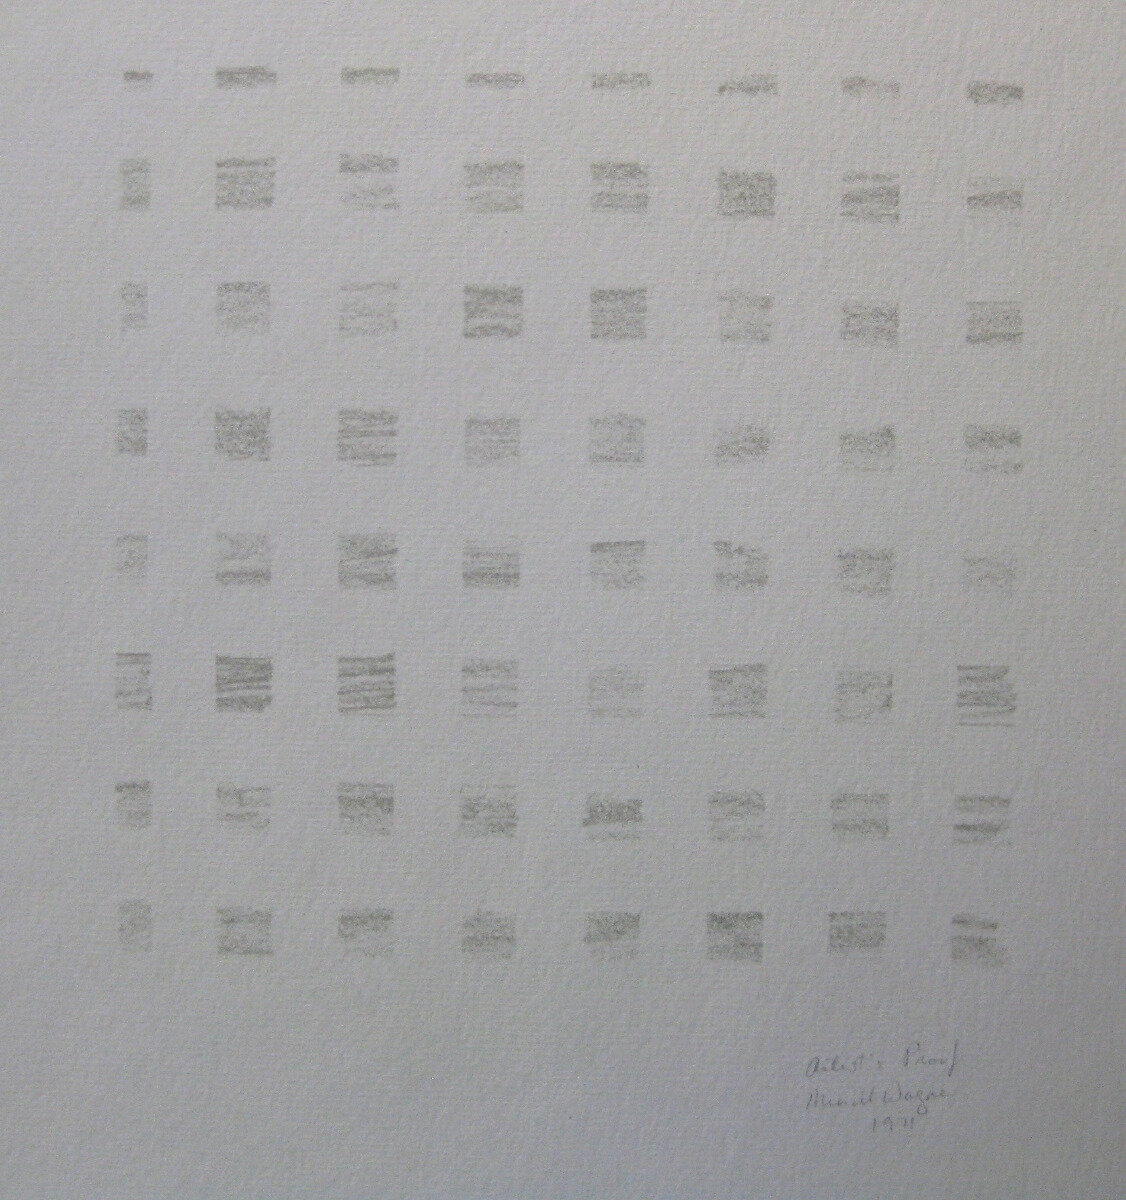  Grid, 1971, 12 x 12 inches, print 